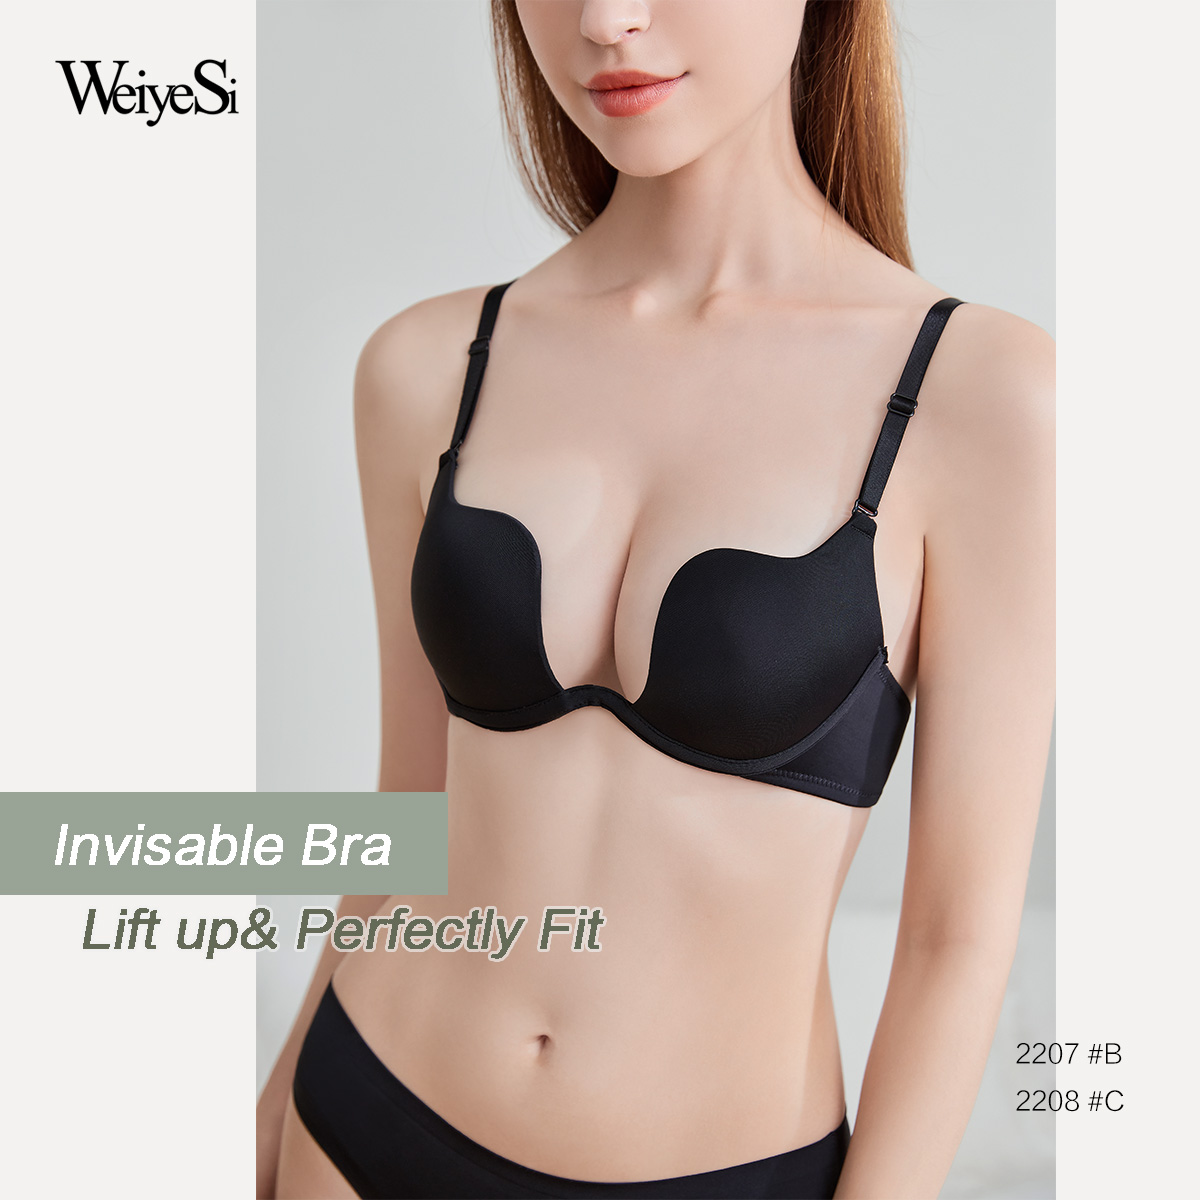 Hestia Women's Underwear Contoured Comfort Bra, Charcoal, 12B